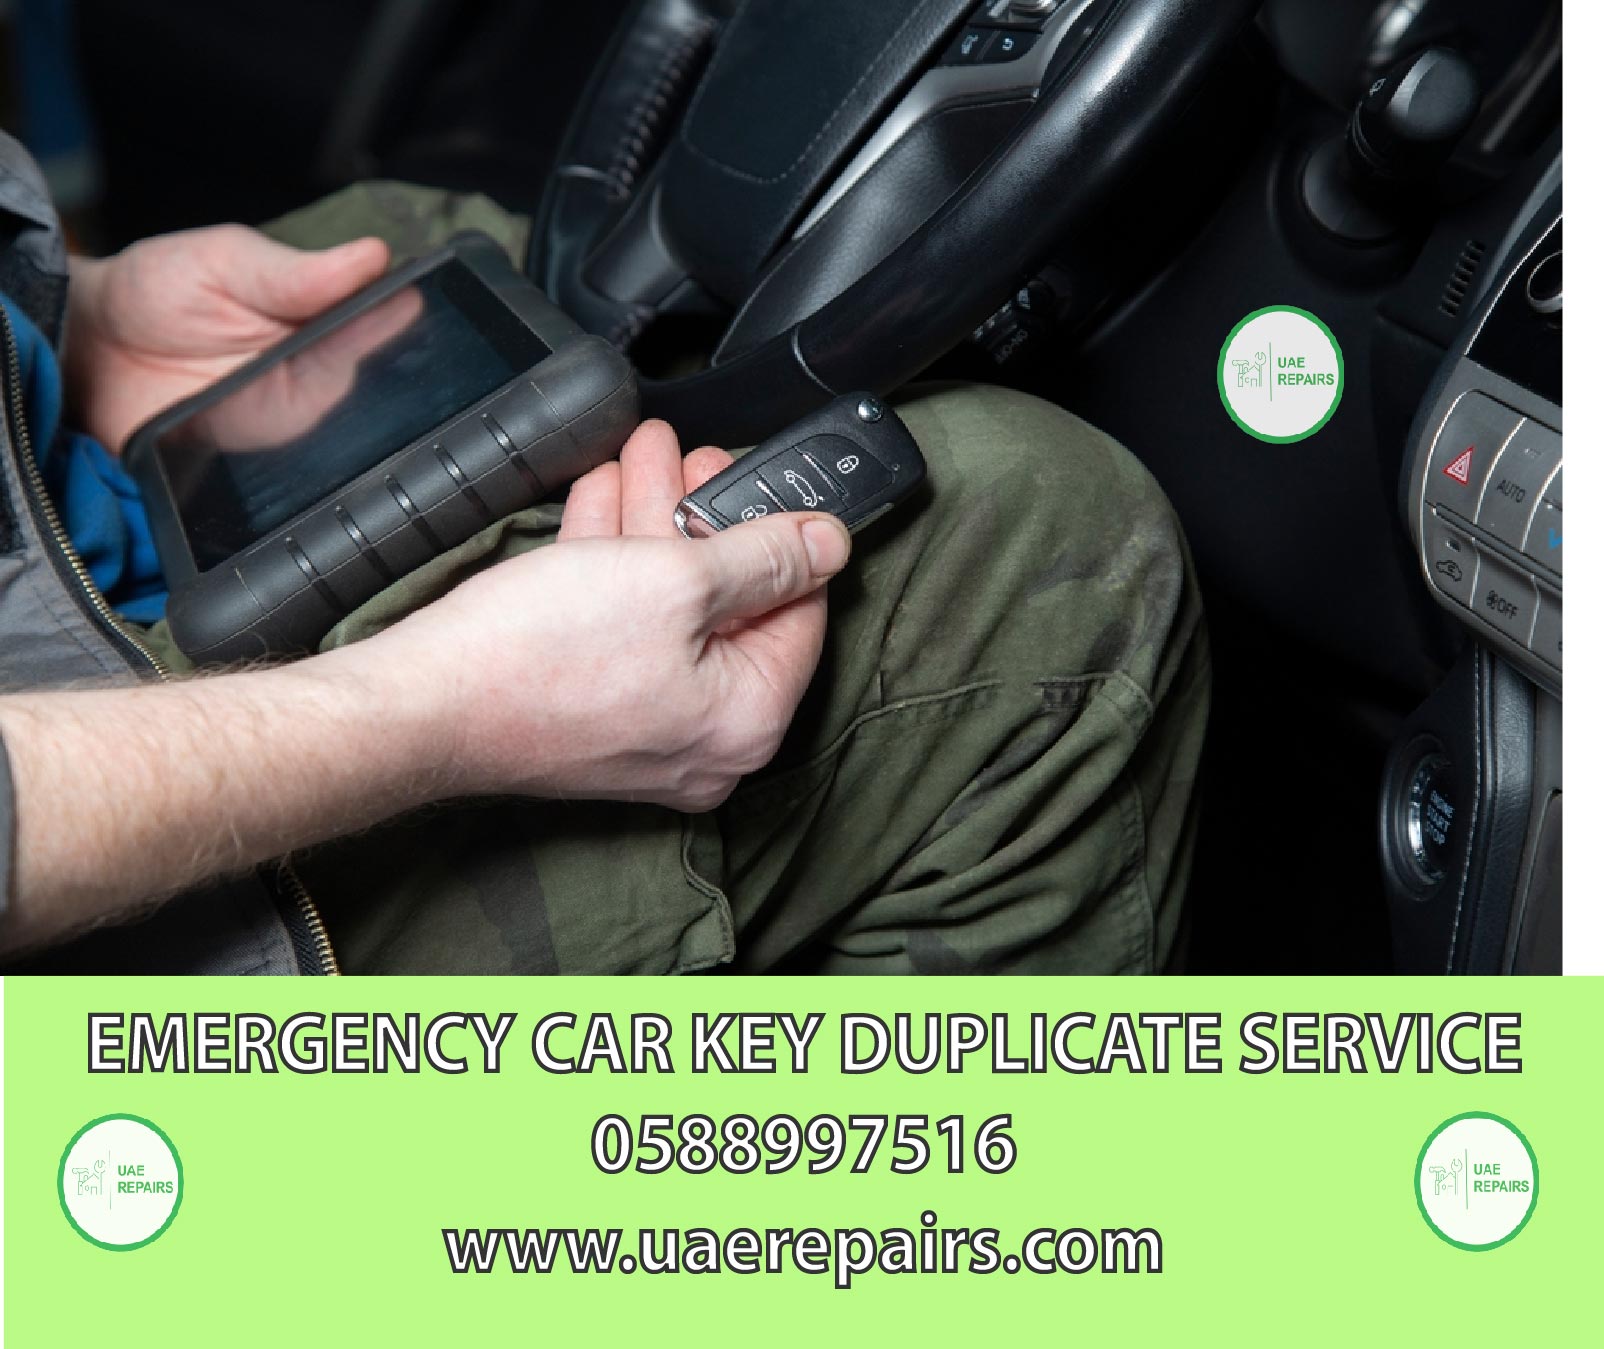 UAE REPAIRS EMERGENCY CAR KEY DUPLICATE SERVICE 0588997516